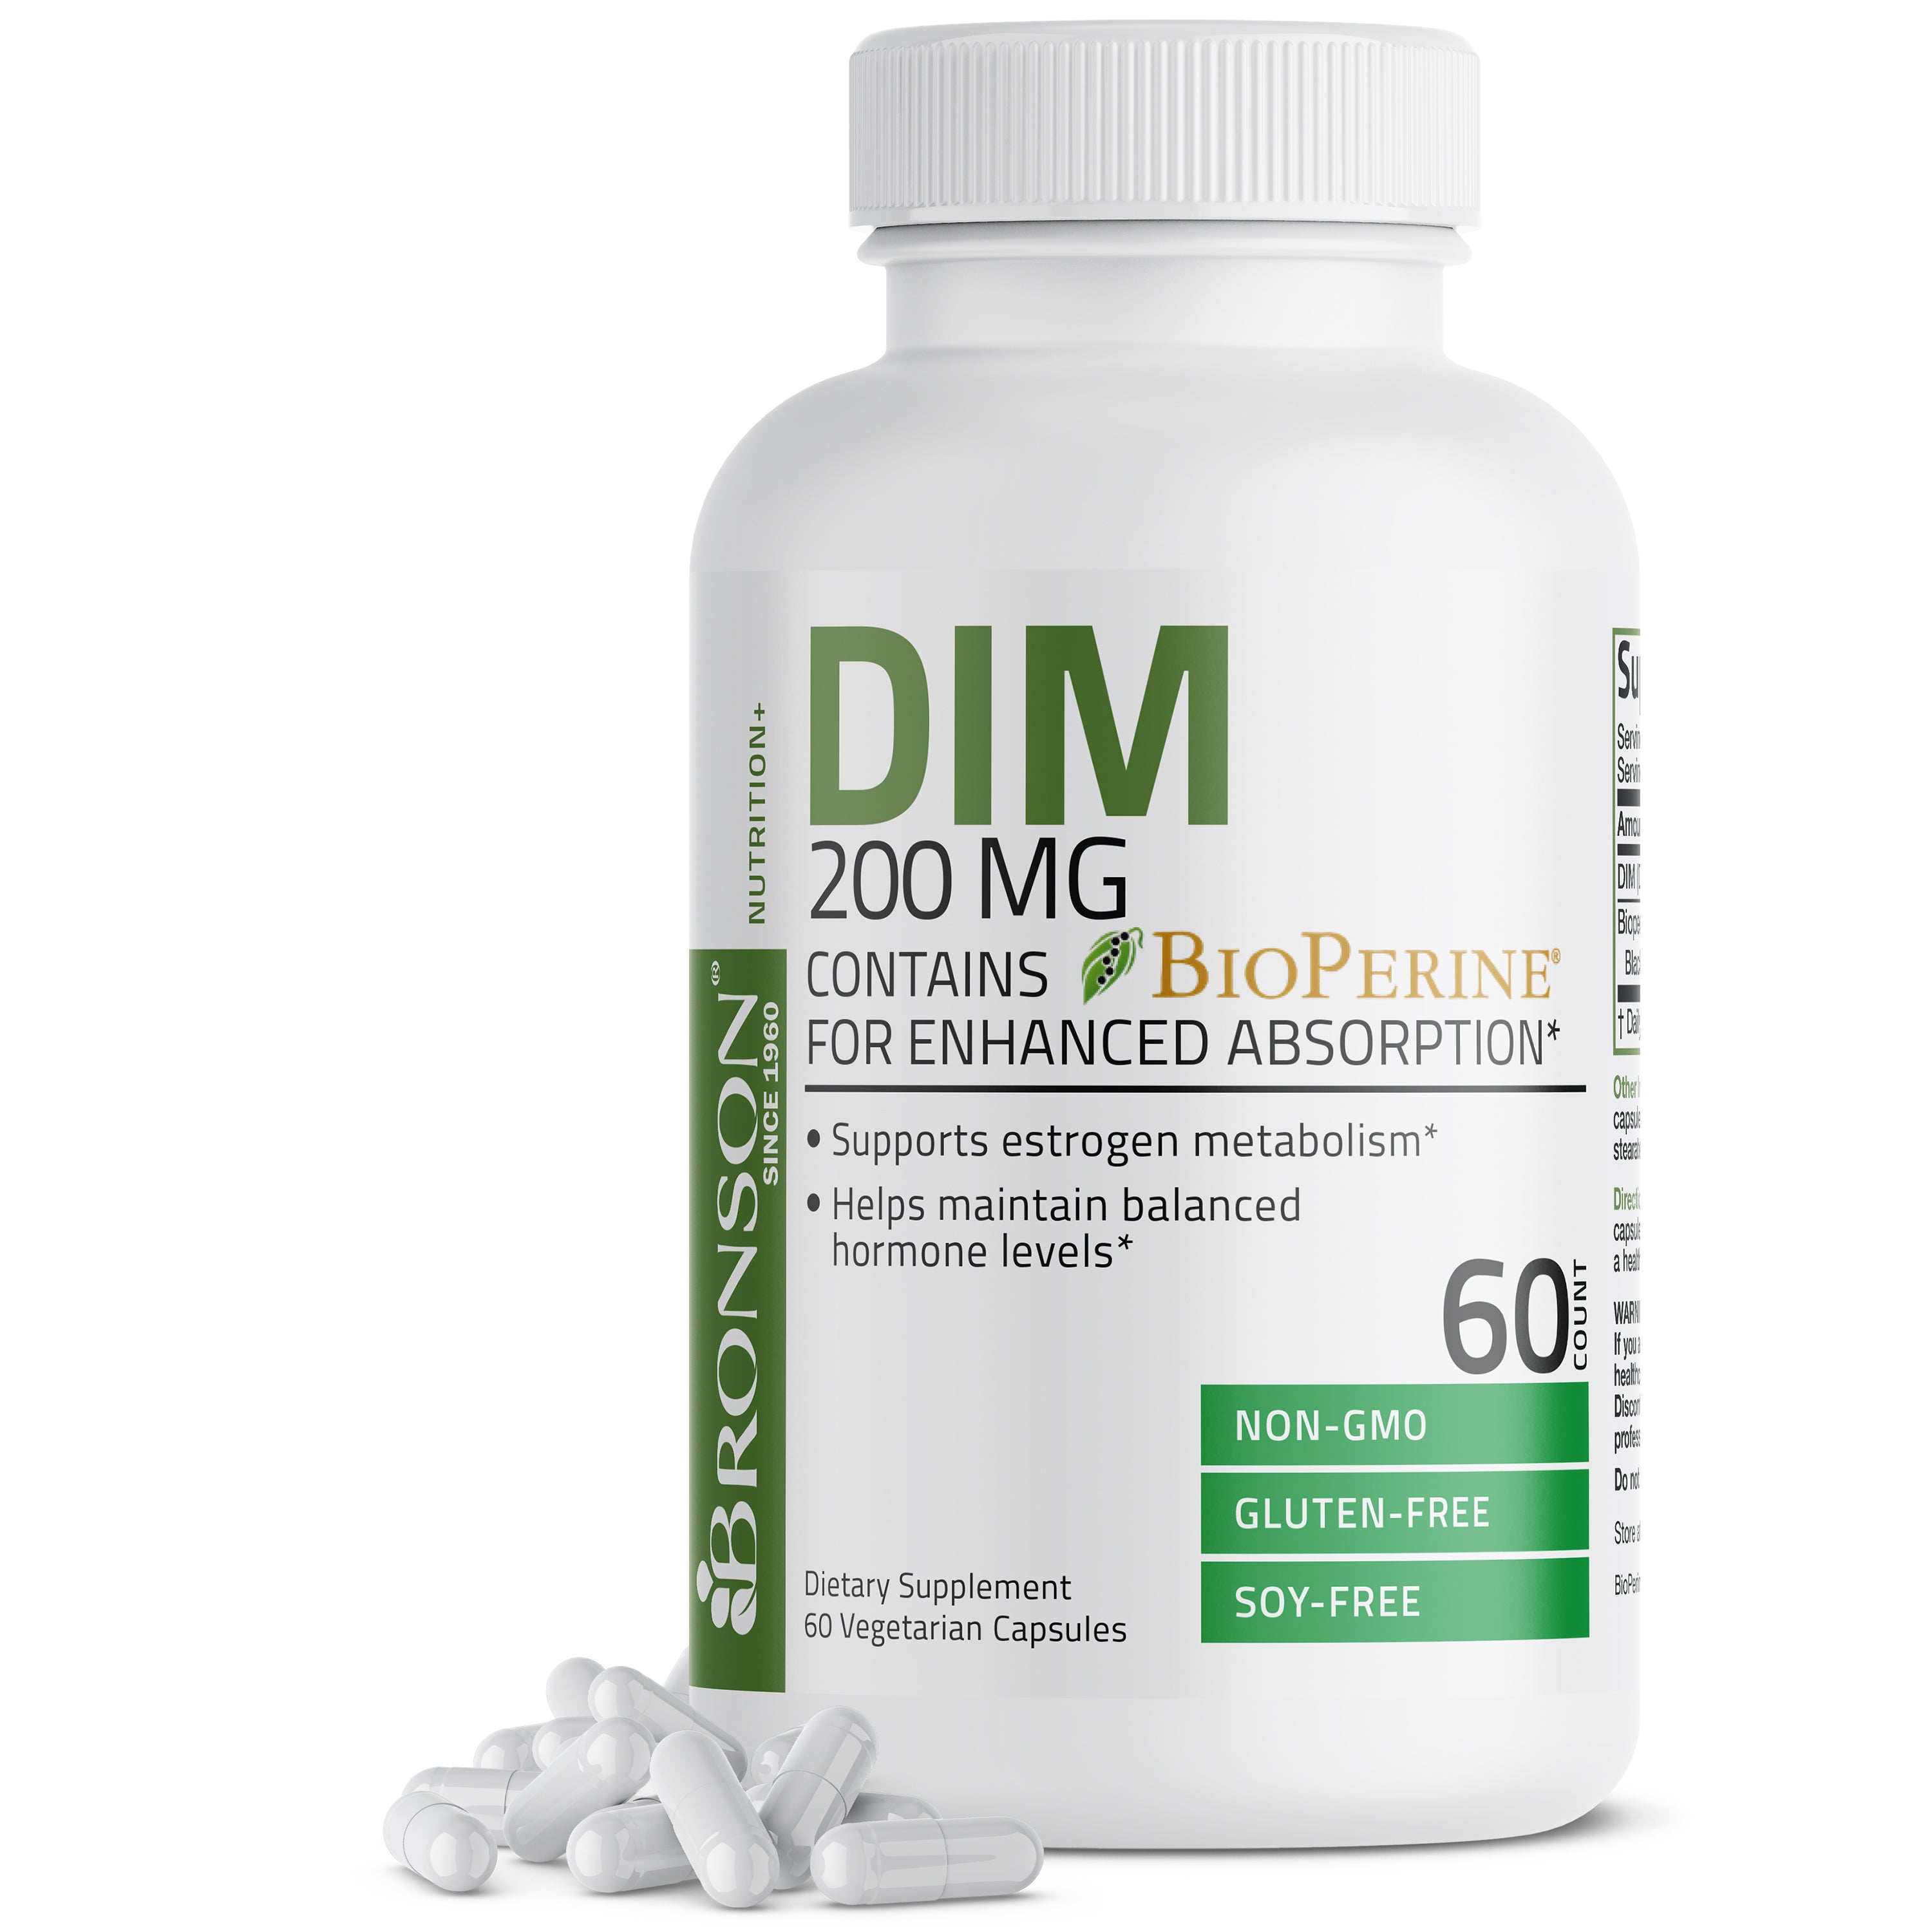 DIM with BioPerine® - 200 mg view 1 of 6